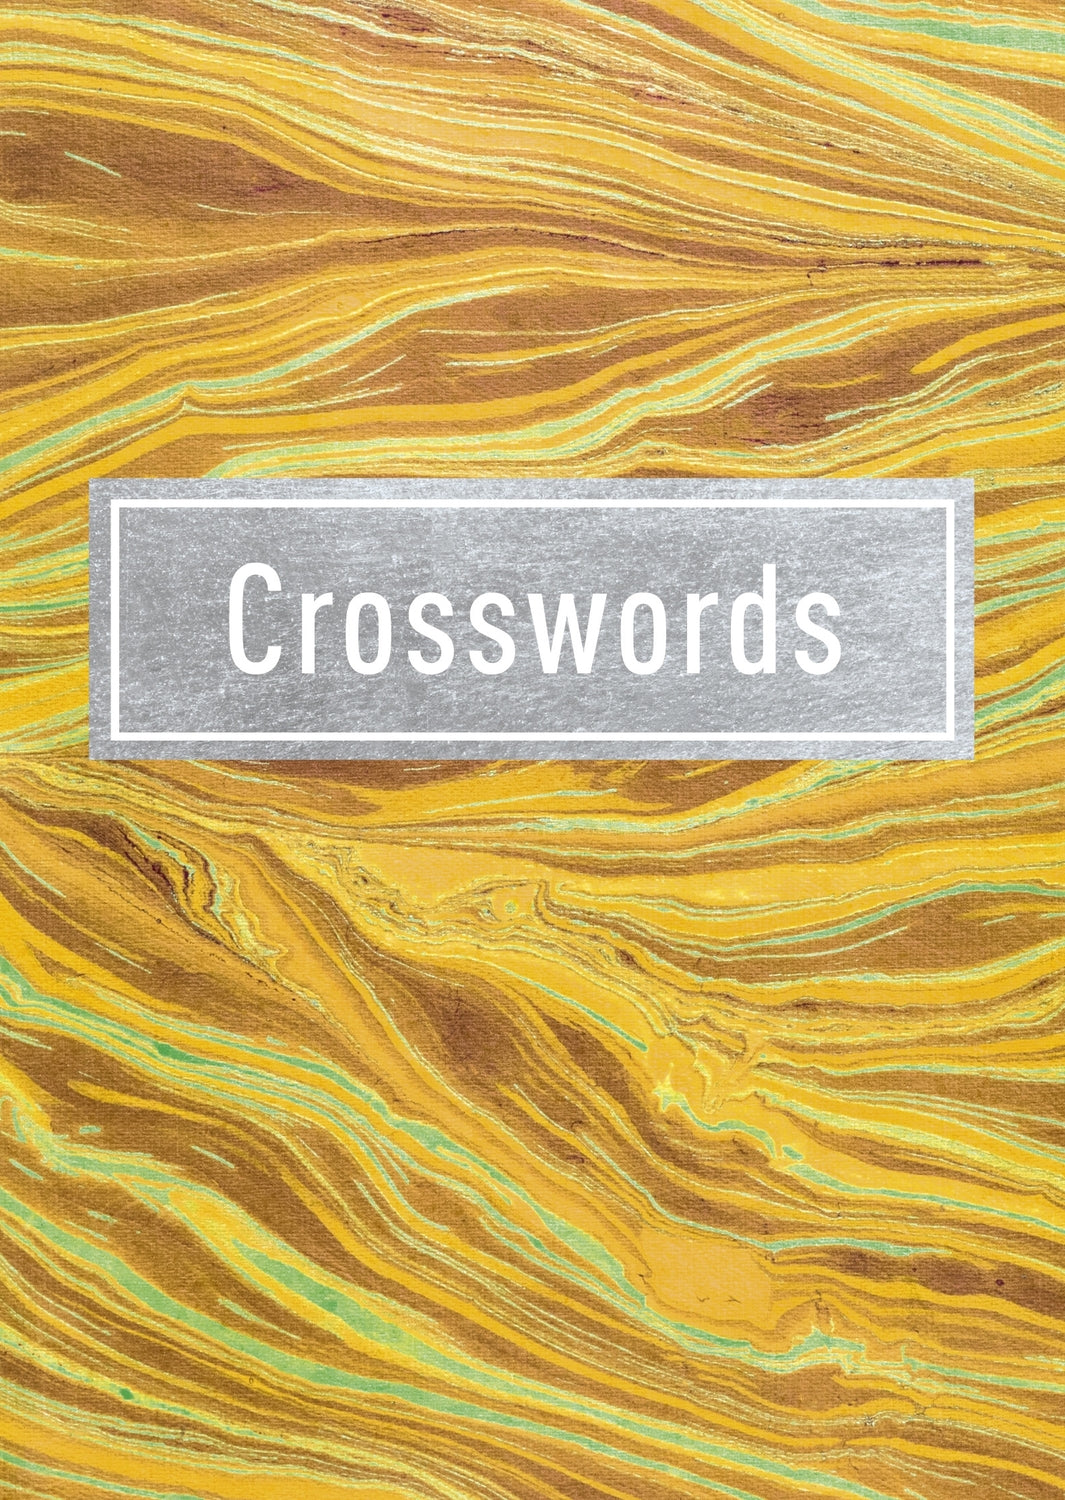 Crosswords (Yellow Cover)